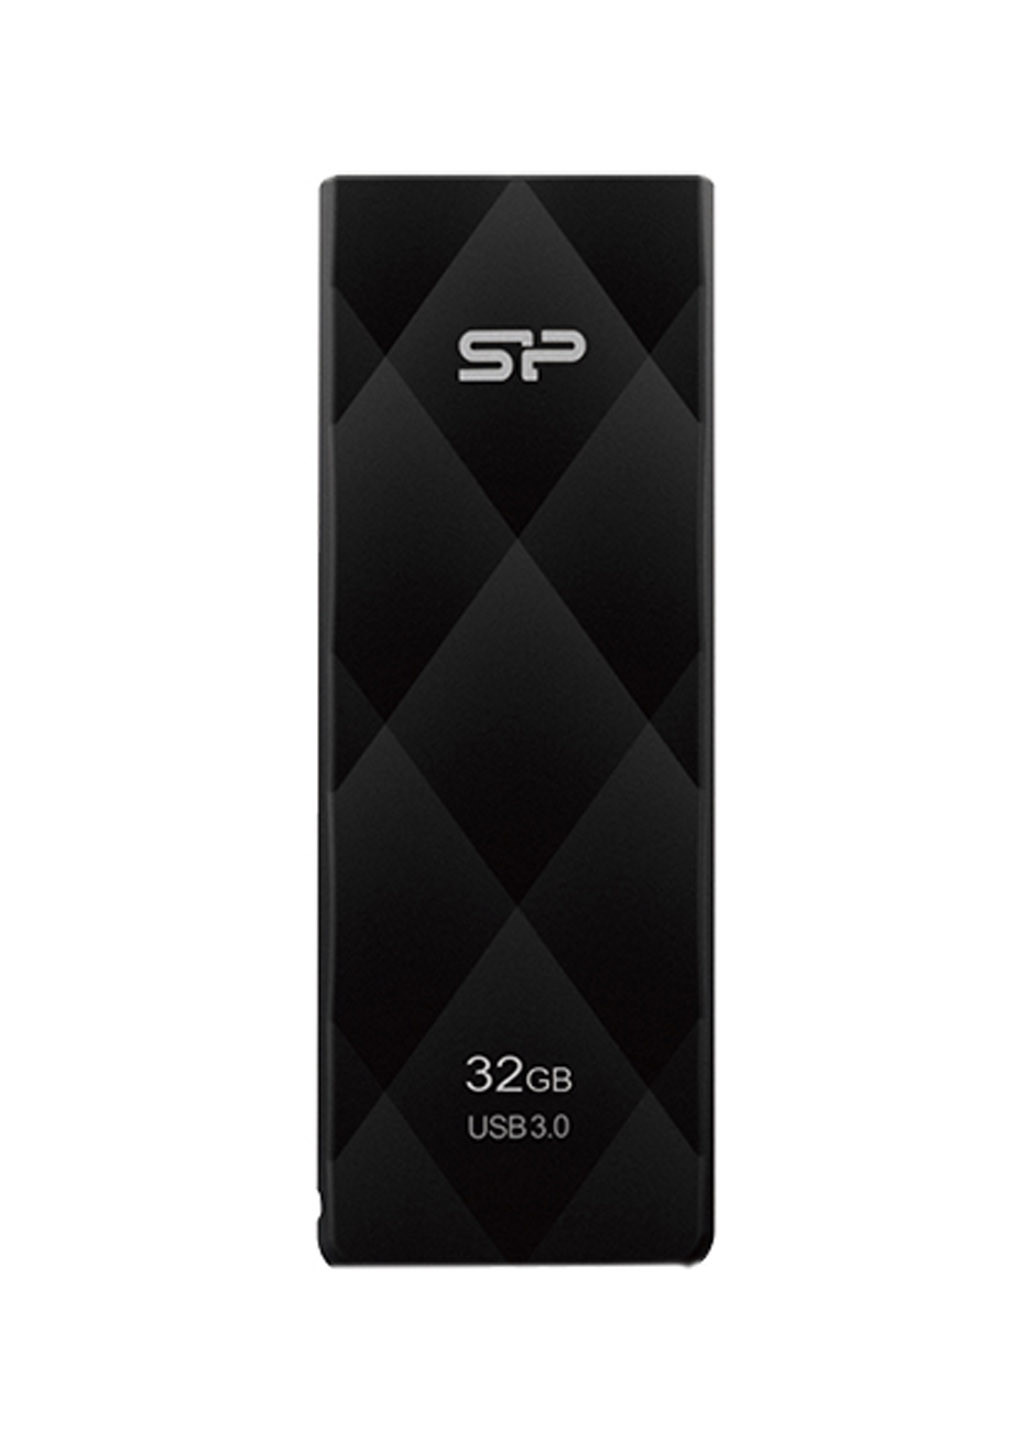 Флеш пам'ять USB Blaze B20 32GB Black (SP032GBUF3B20V1K) Silicon Power флеш память usb silicon power blaze b20 32gb black (sp032gbuf3b20v1k) (132007746)